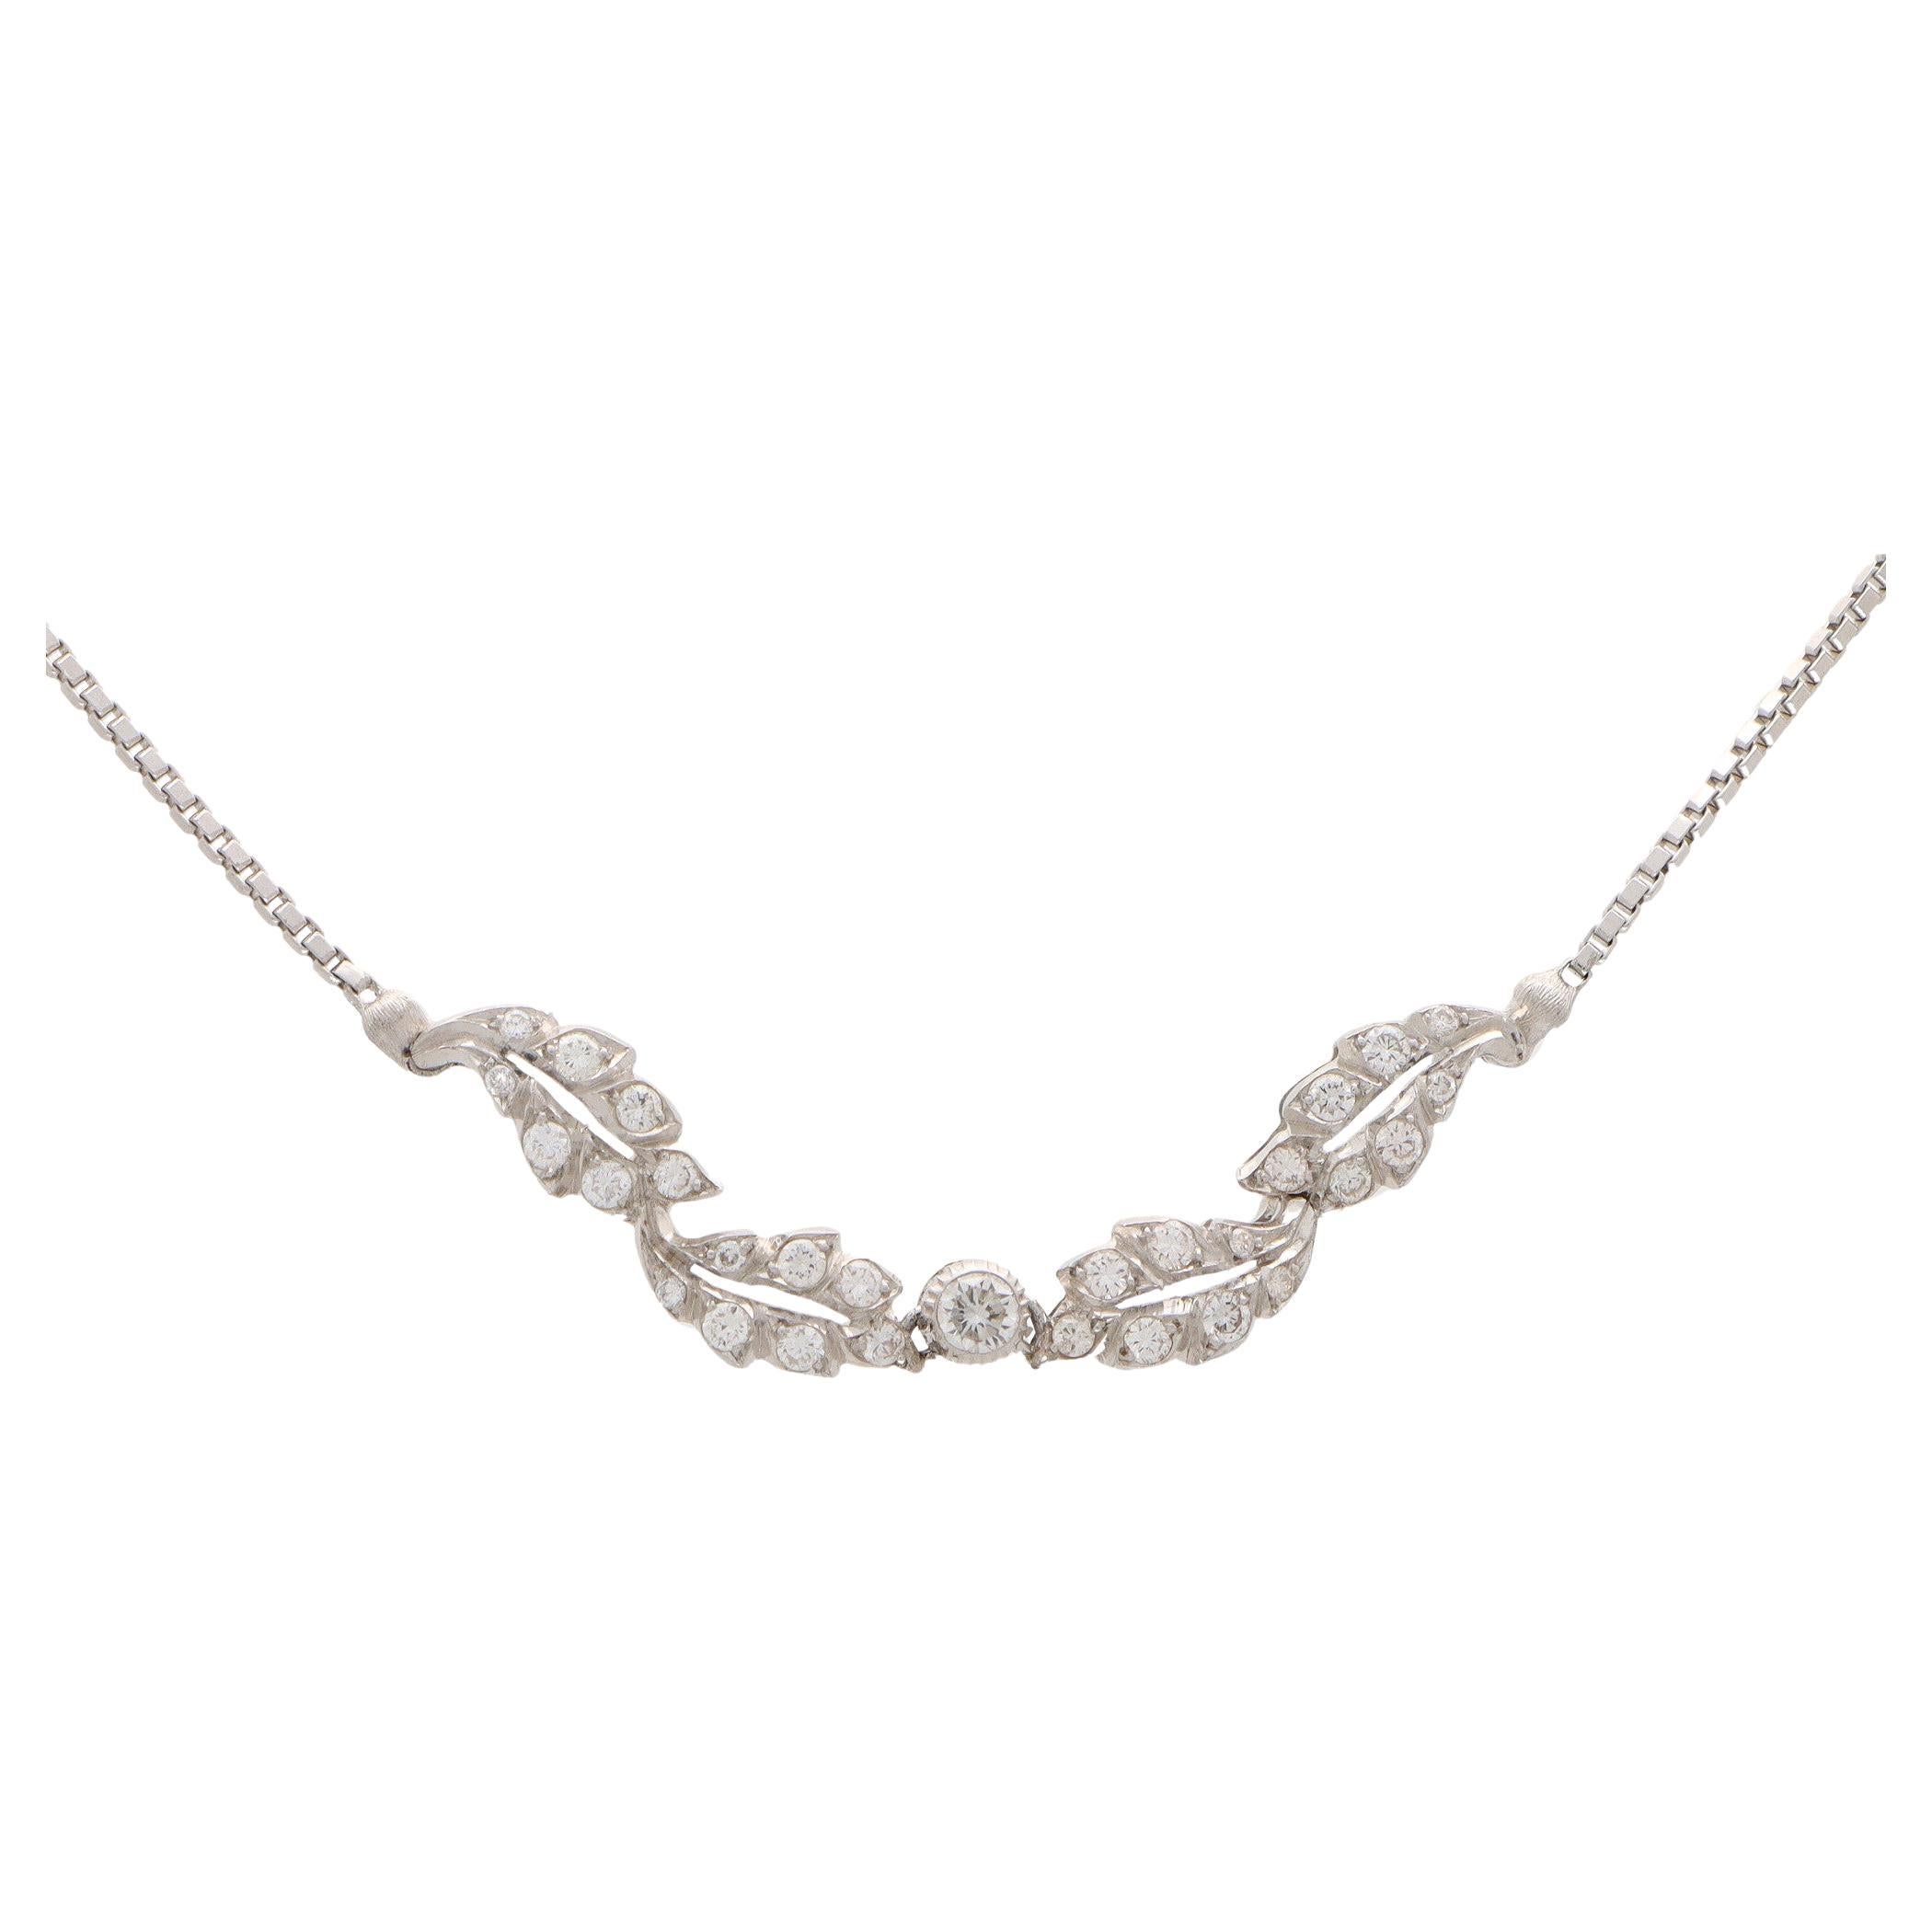 Vintage Buccellati 'Les Amoureux' Diamond Pendant Necklace in 18k White Gold